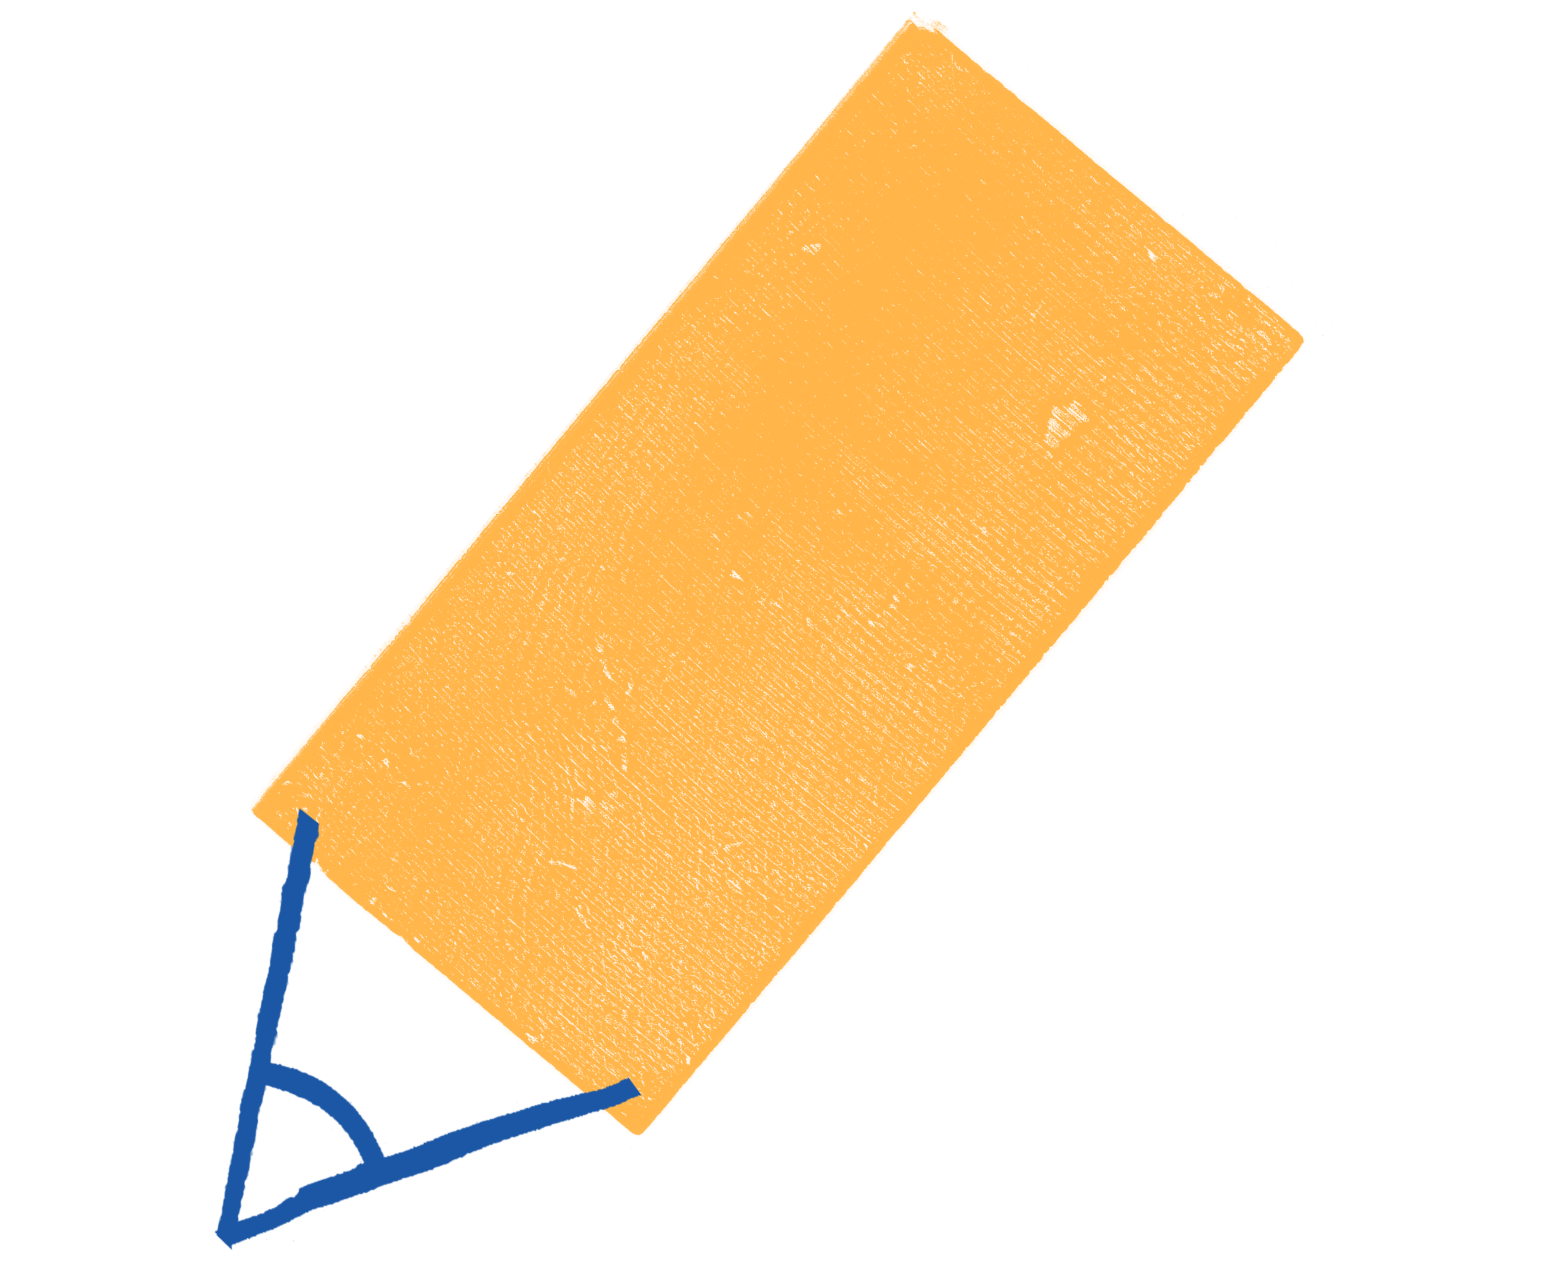 Illustration of a pencil